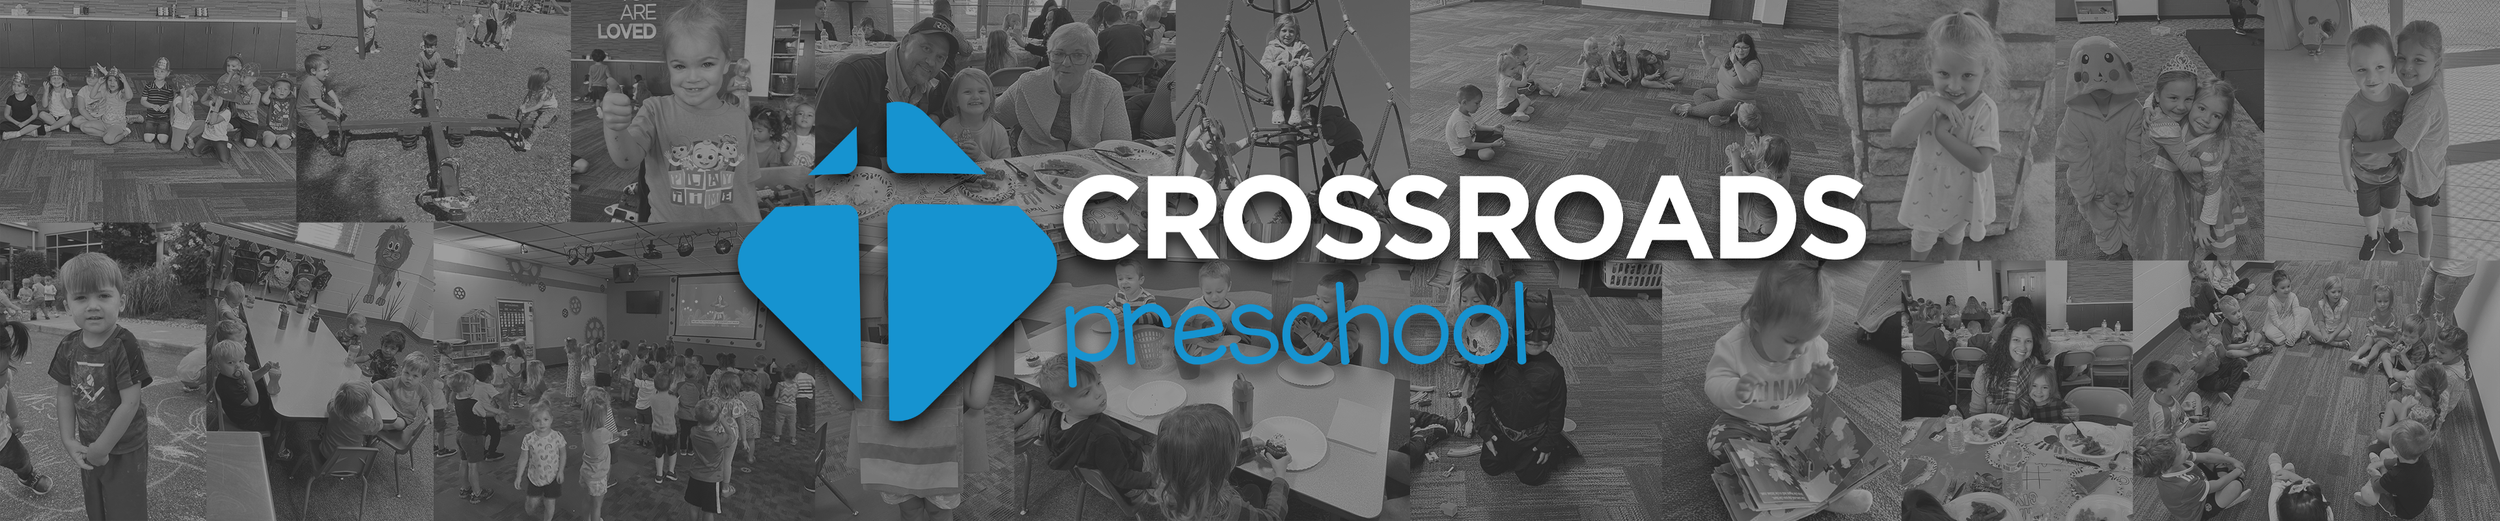 Crossroads Preschool | Crossroads Community Church